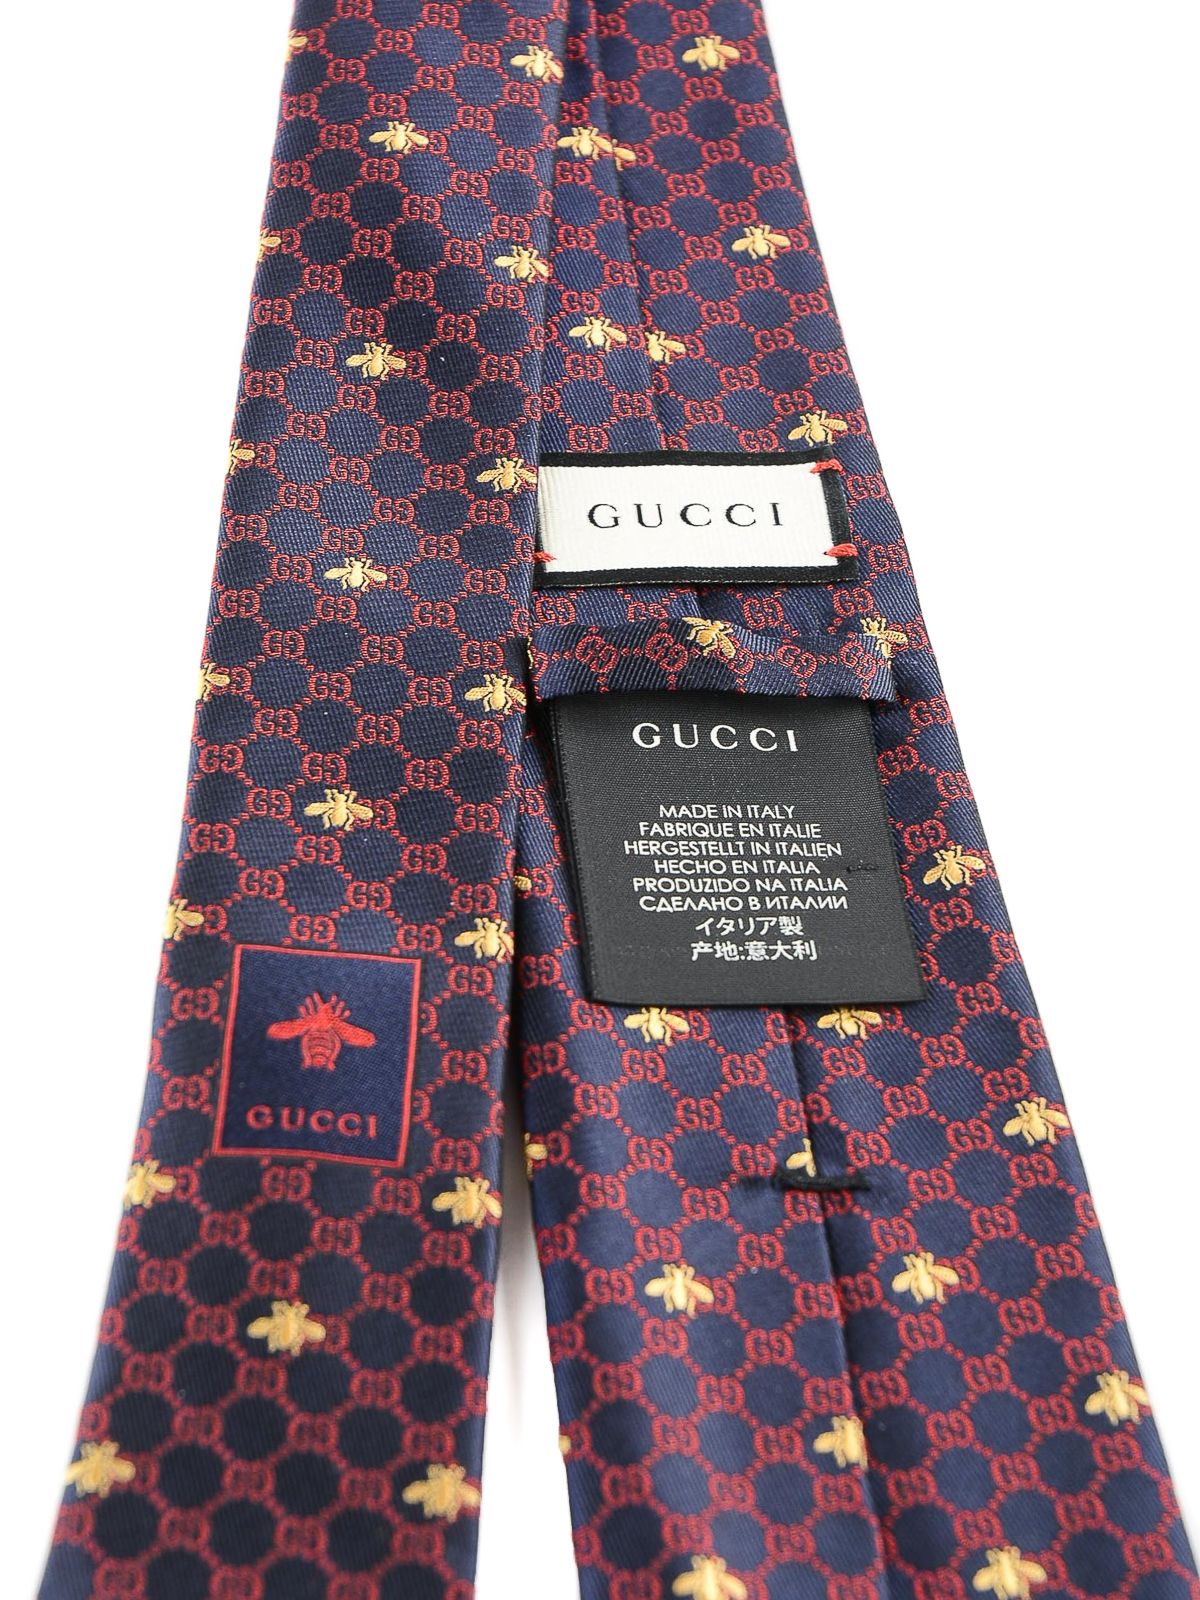 Corbatas pajaritas Gucci - Corbata - Gg - 5450784E0024174 iKRIX.com